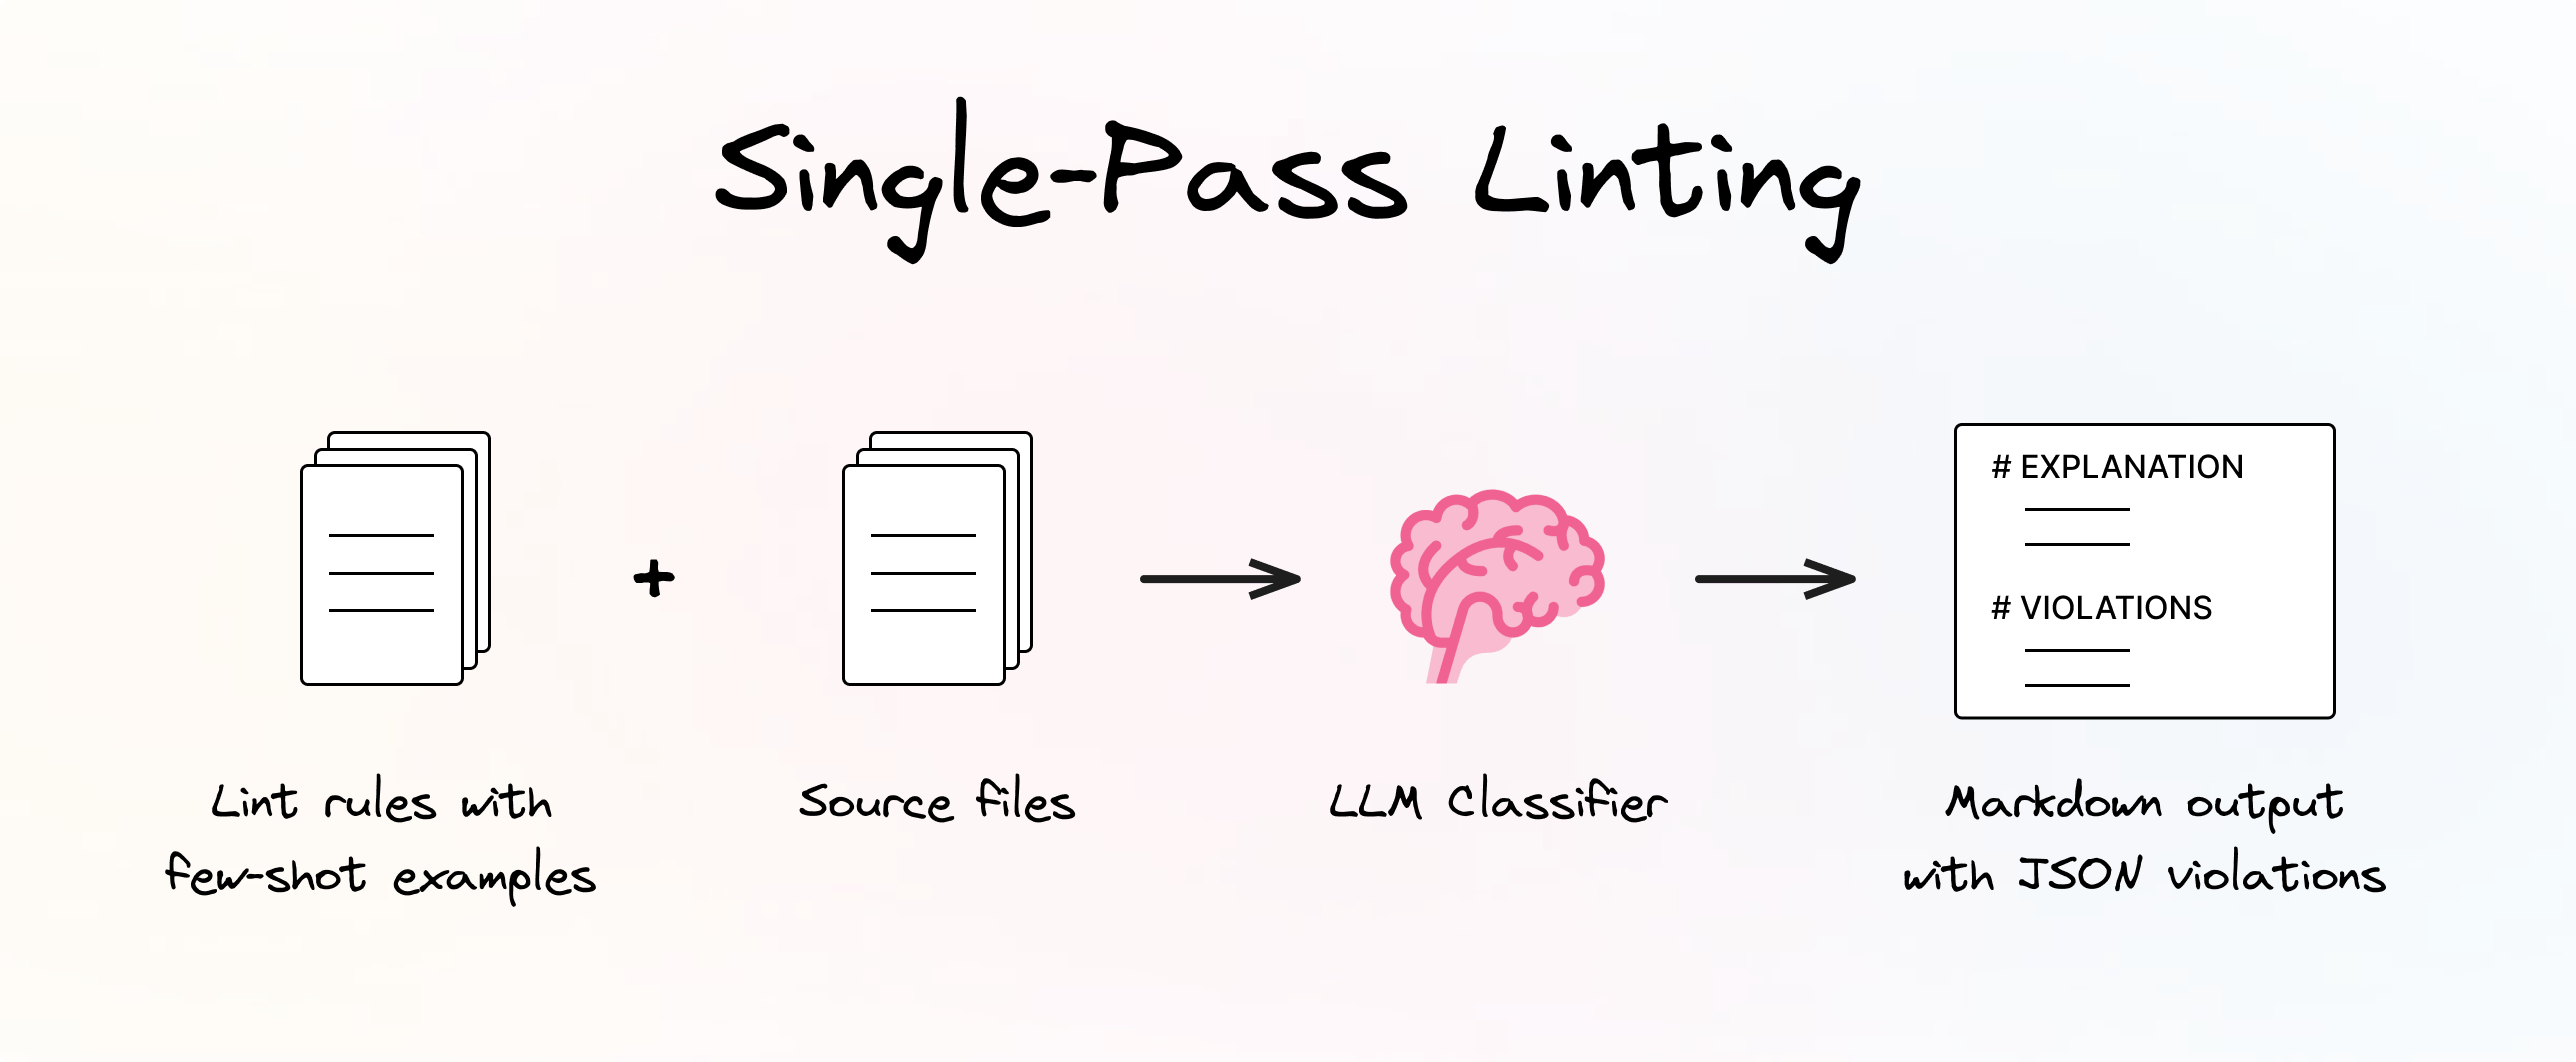 Single-Pass Linting